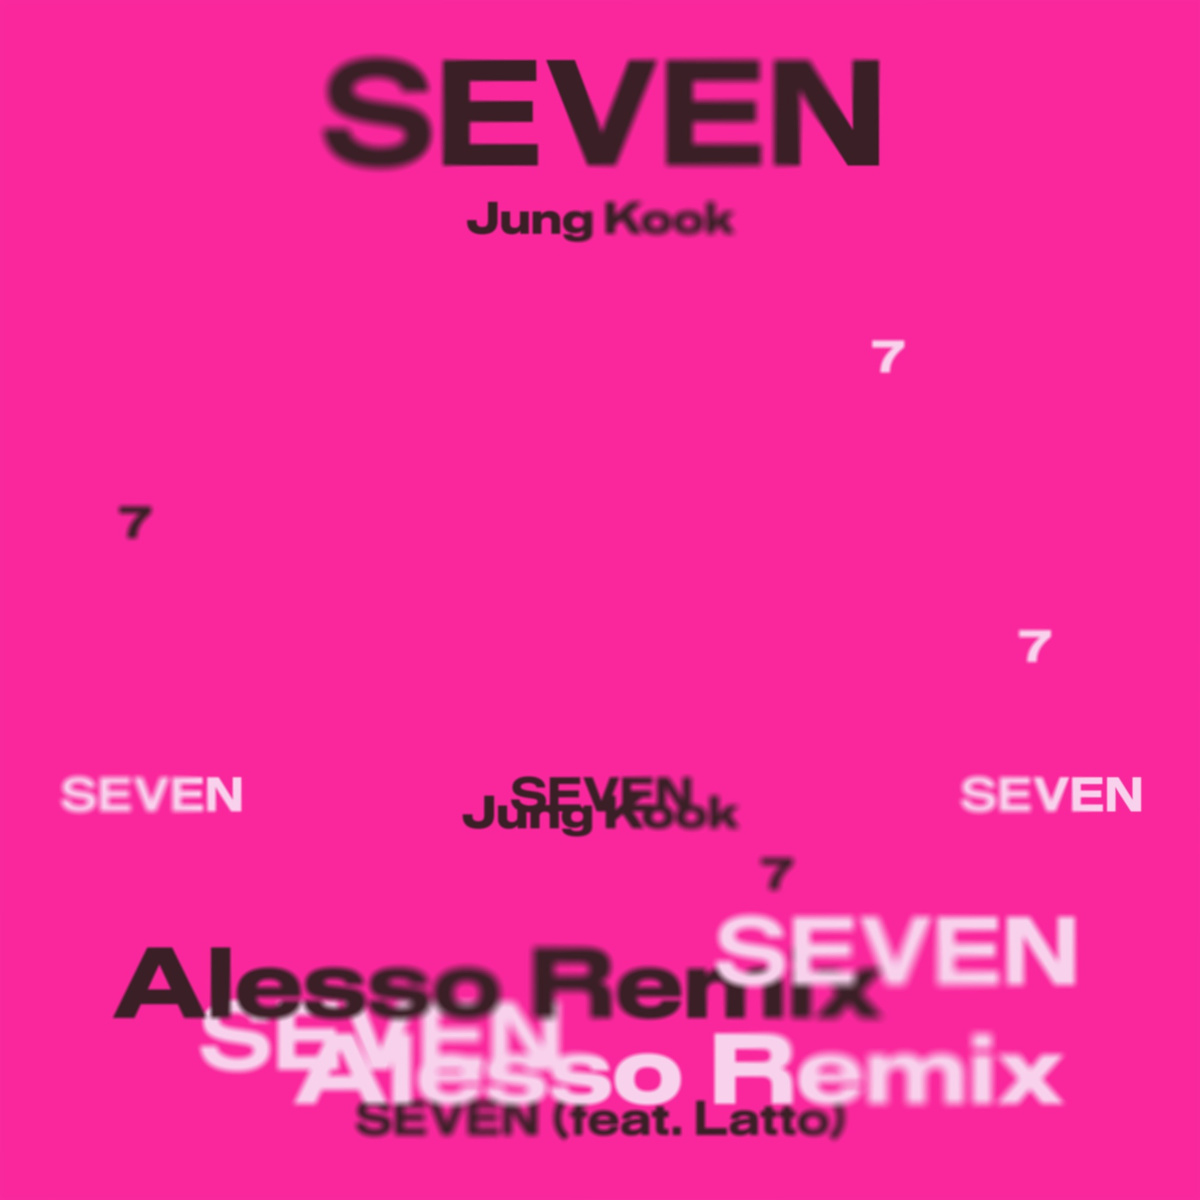 BTS ジョングク「Seven(feat. Latto) - Alesso Remix」/ BIGHIT MUSIC